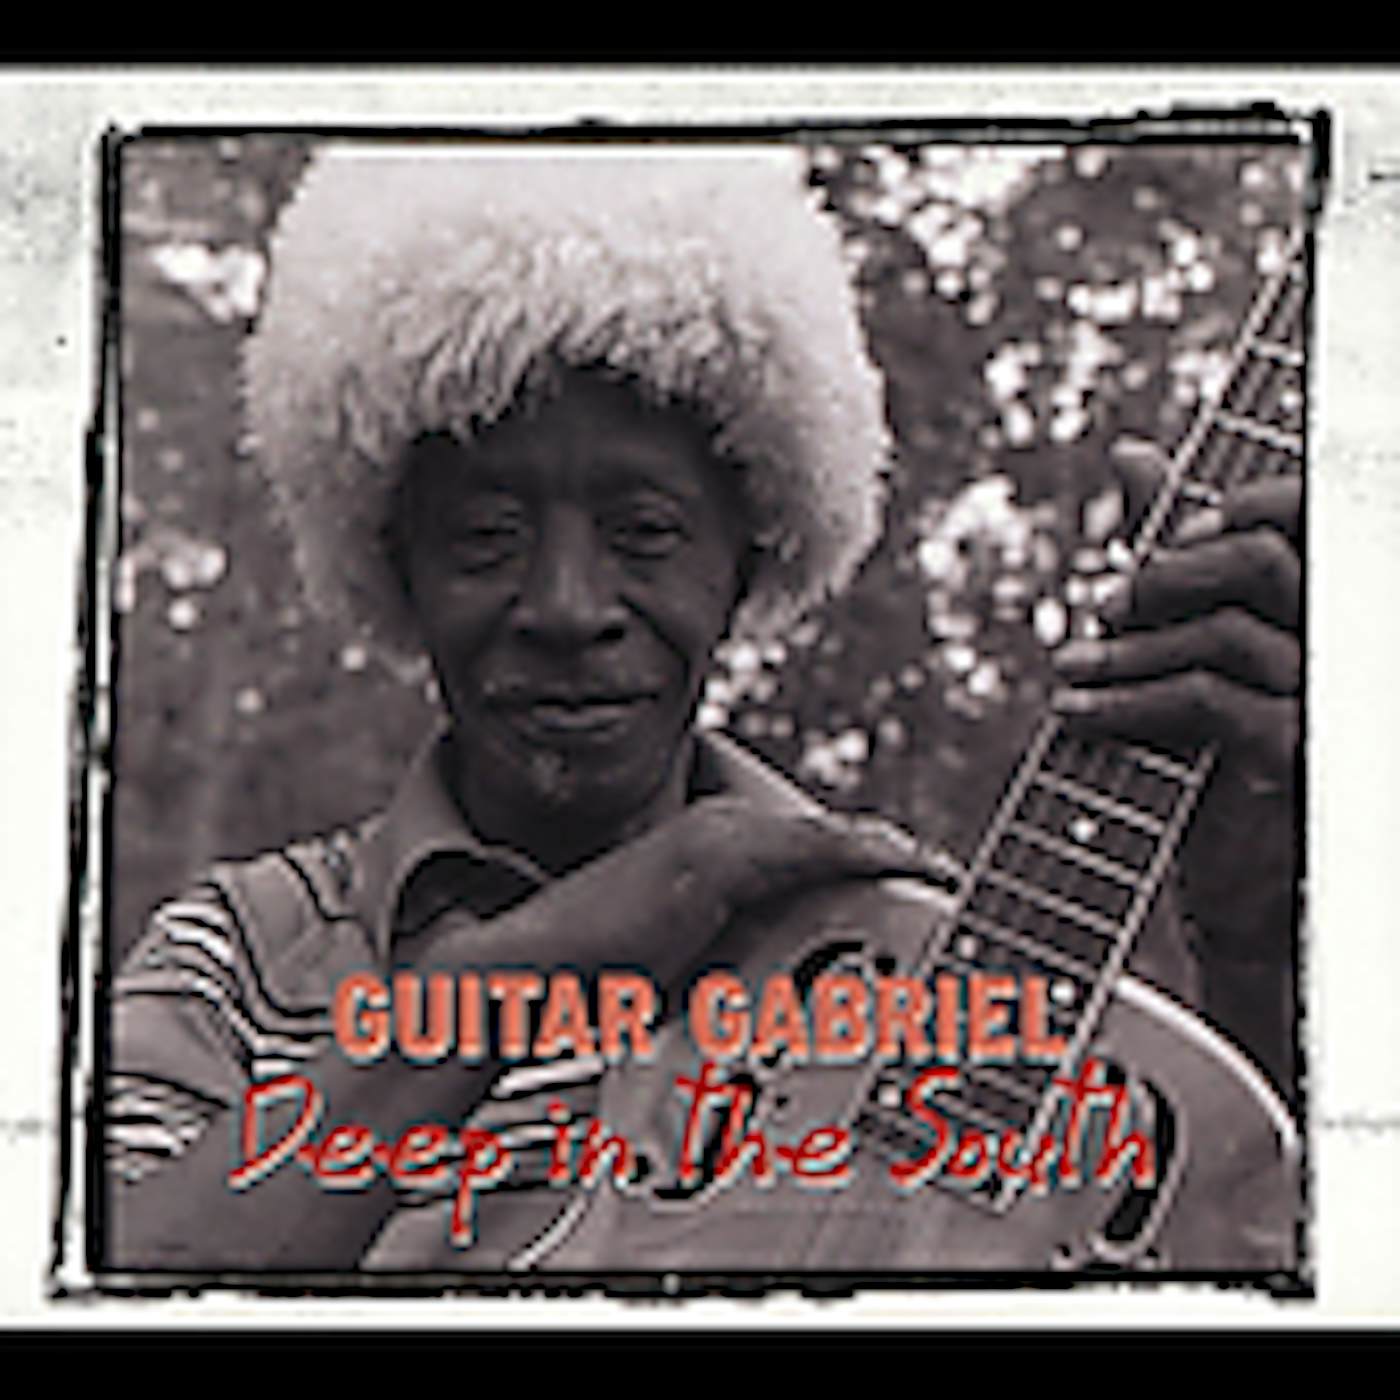 Guitar Gabriel DEEP IN THE SOUTH CD